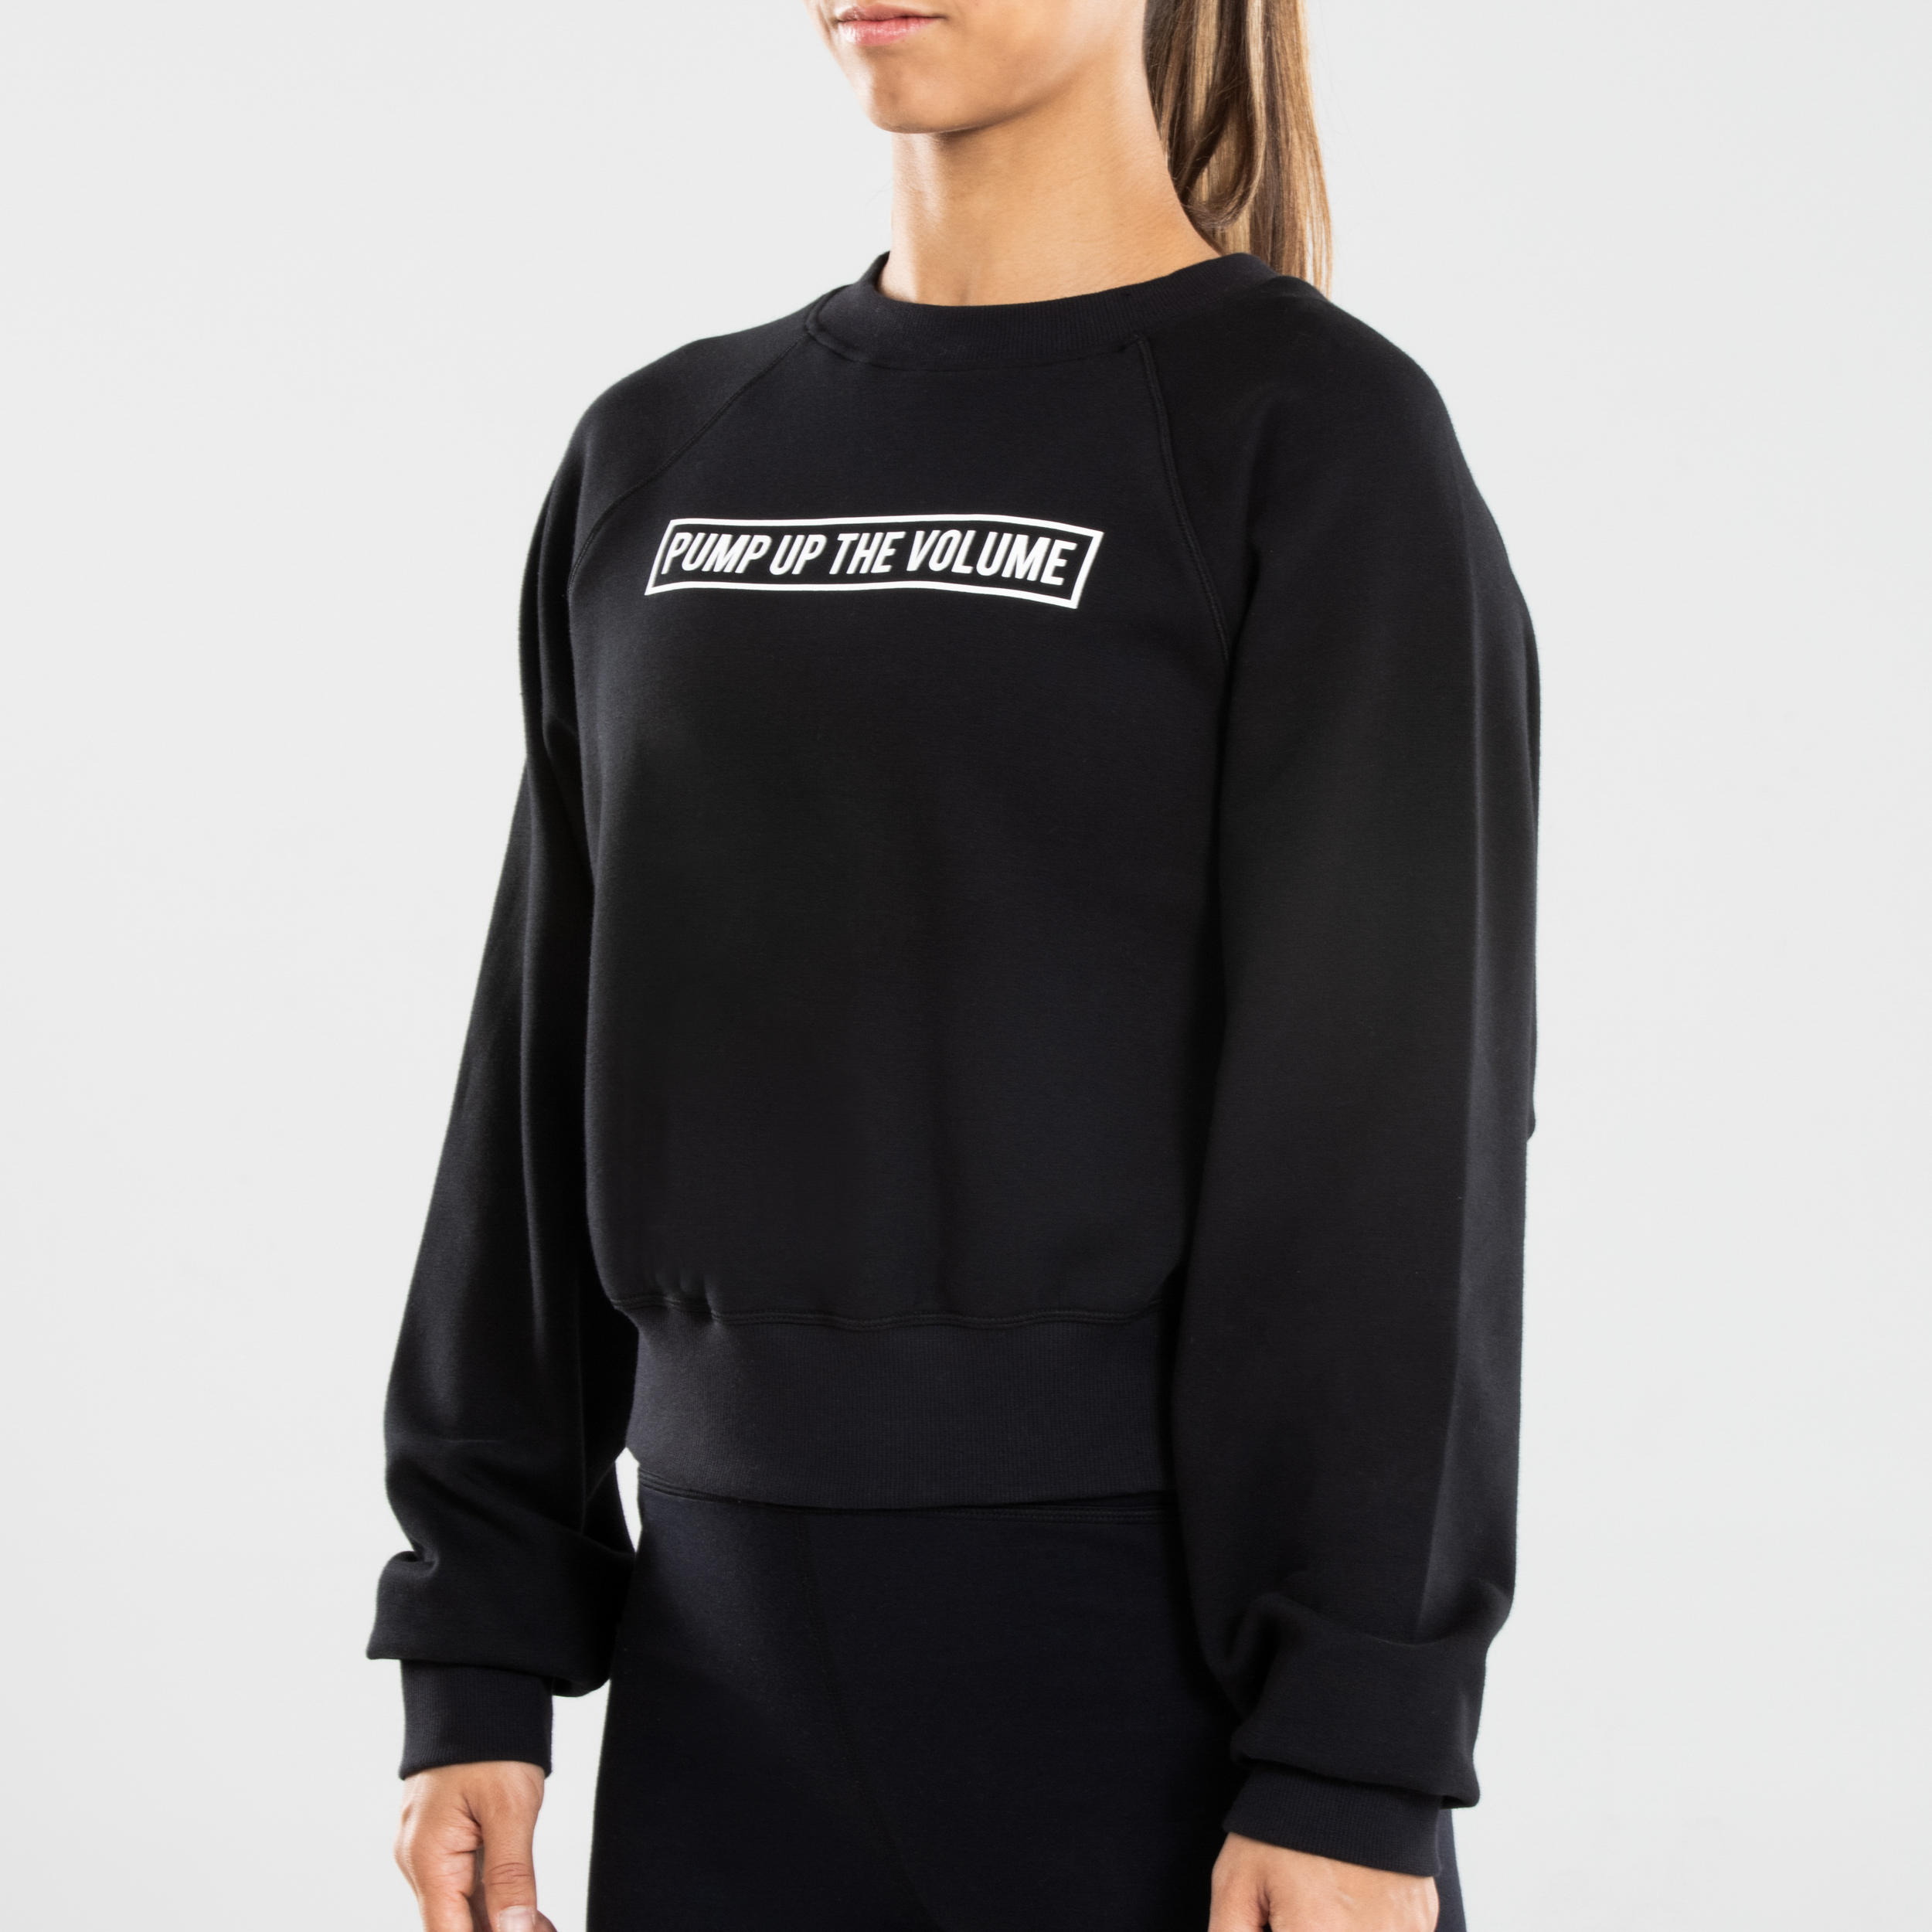 STAREVER Women's Urban Dance Cropped Sweatshirt - Black with Prints